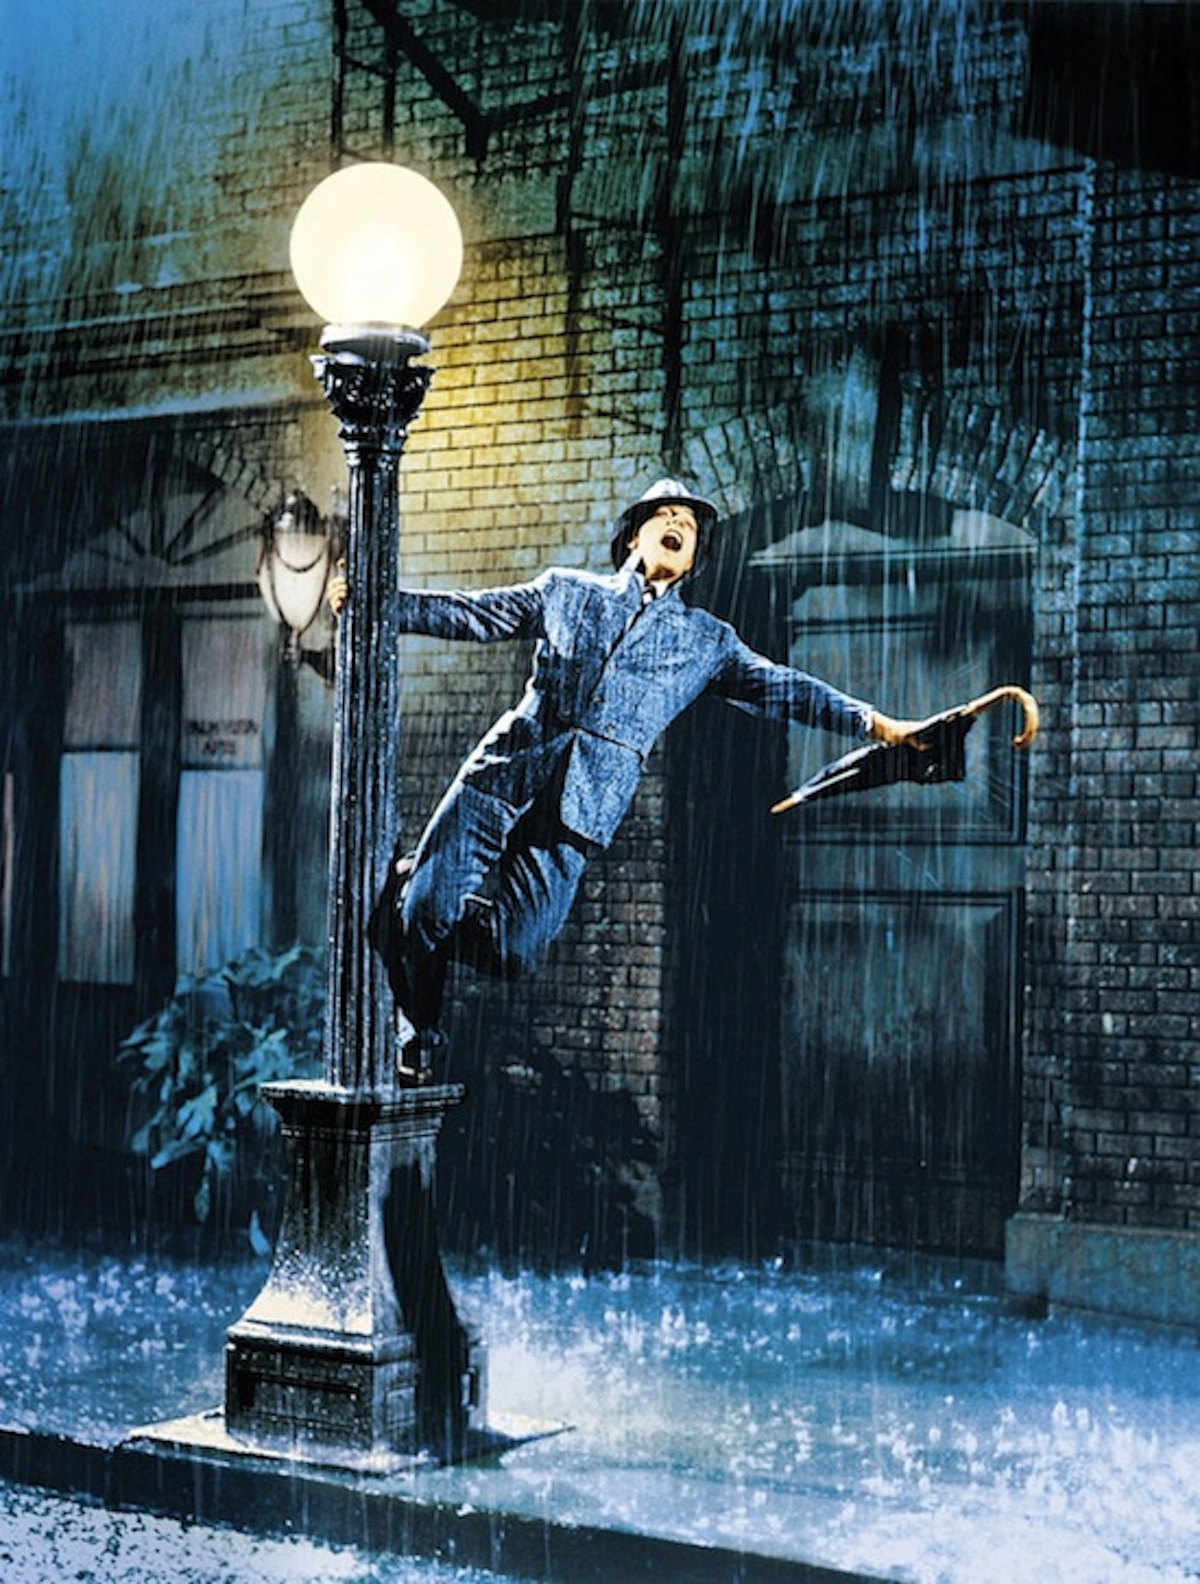 Gene Kelly in "Singing in the Rain".